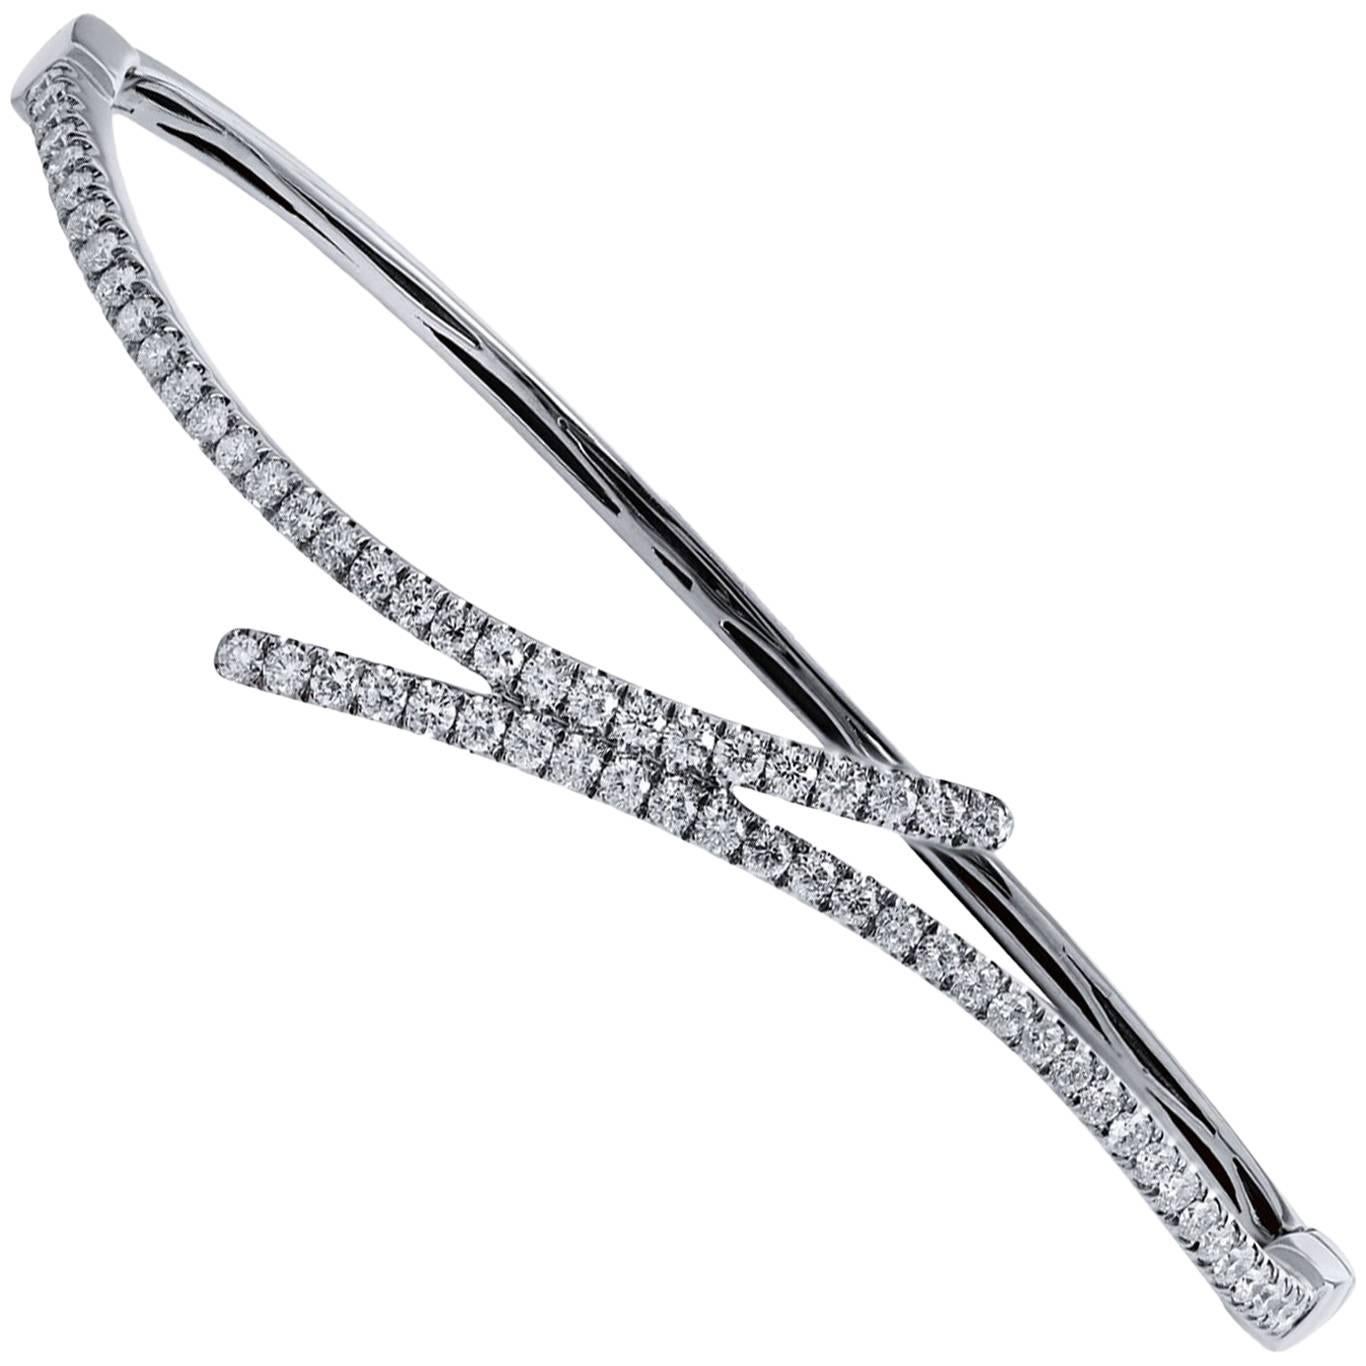 1.13 Carat Pave Diamond Hinge Bracelet